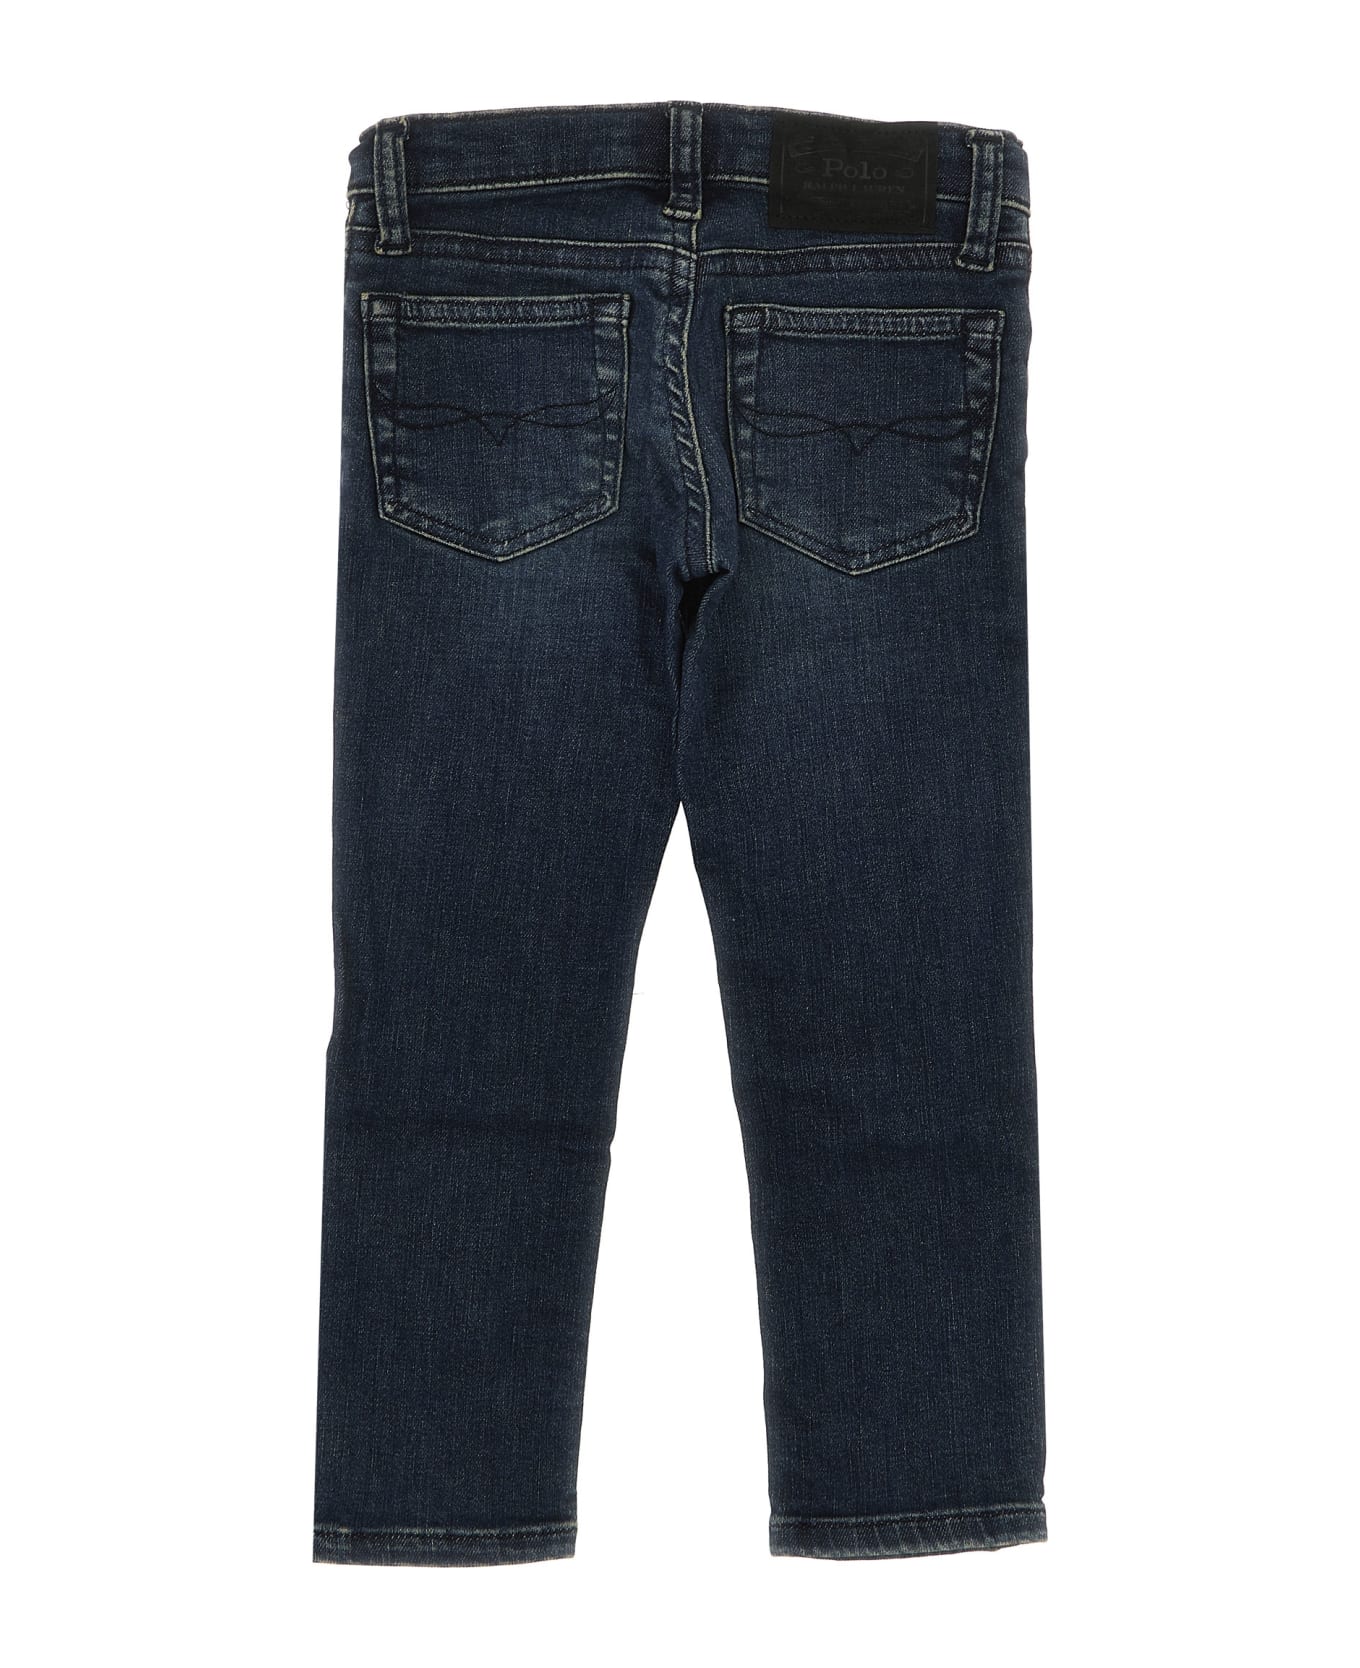 Polo Ralph Lauren 'the Eldridge Skinny' Jeans - Blue